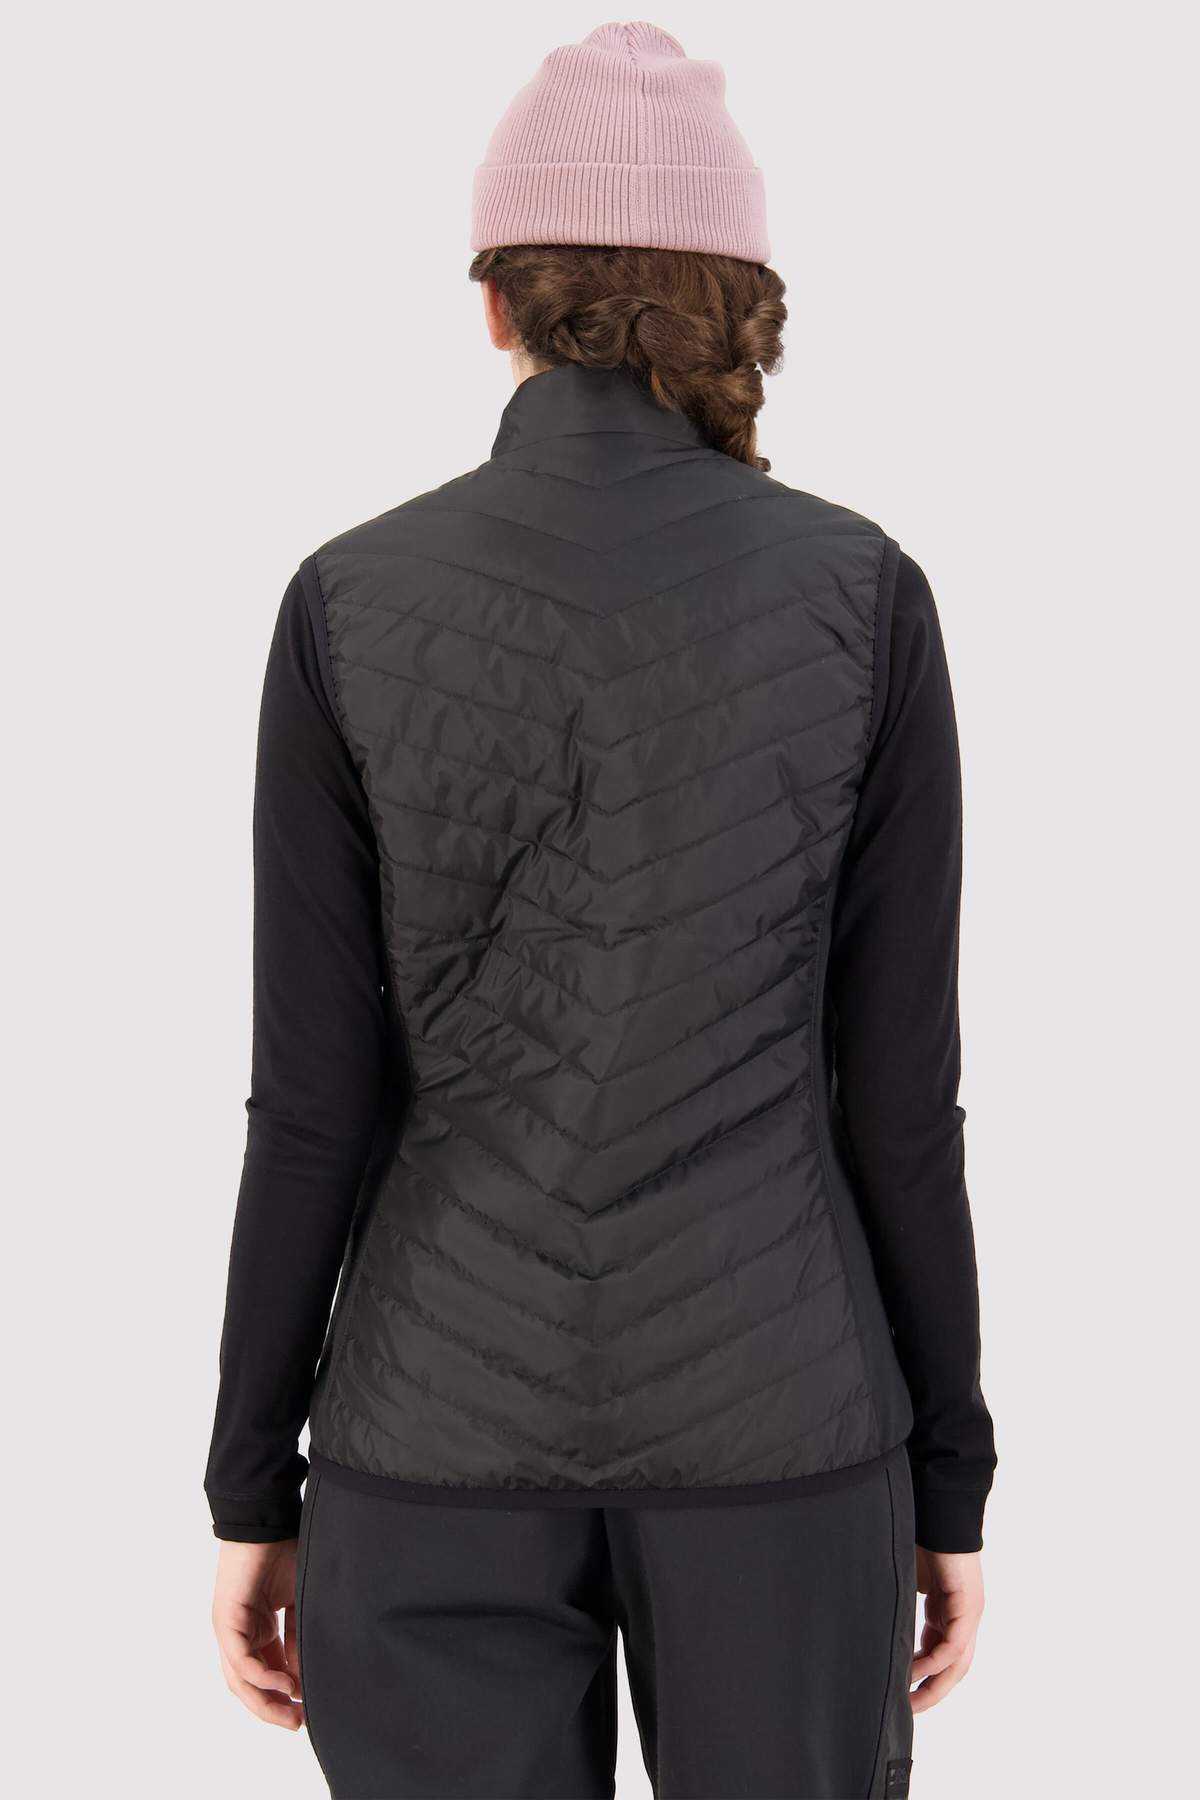 Mons Royale Neve Wool Insulation Vest